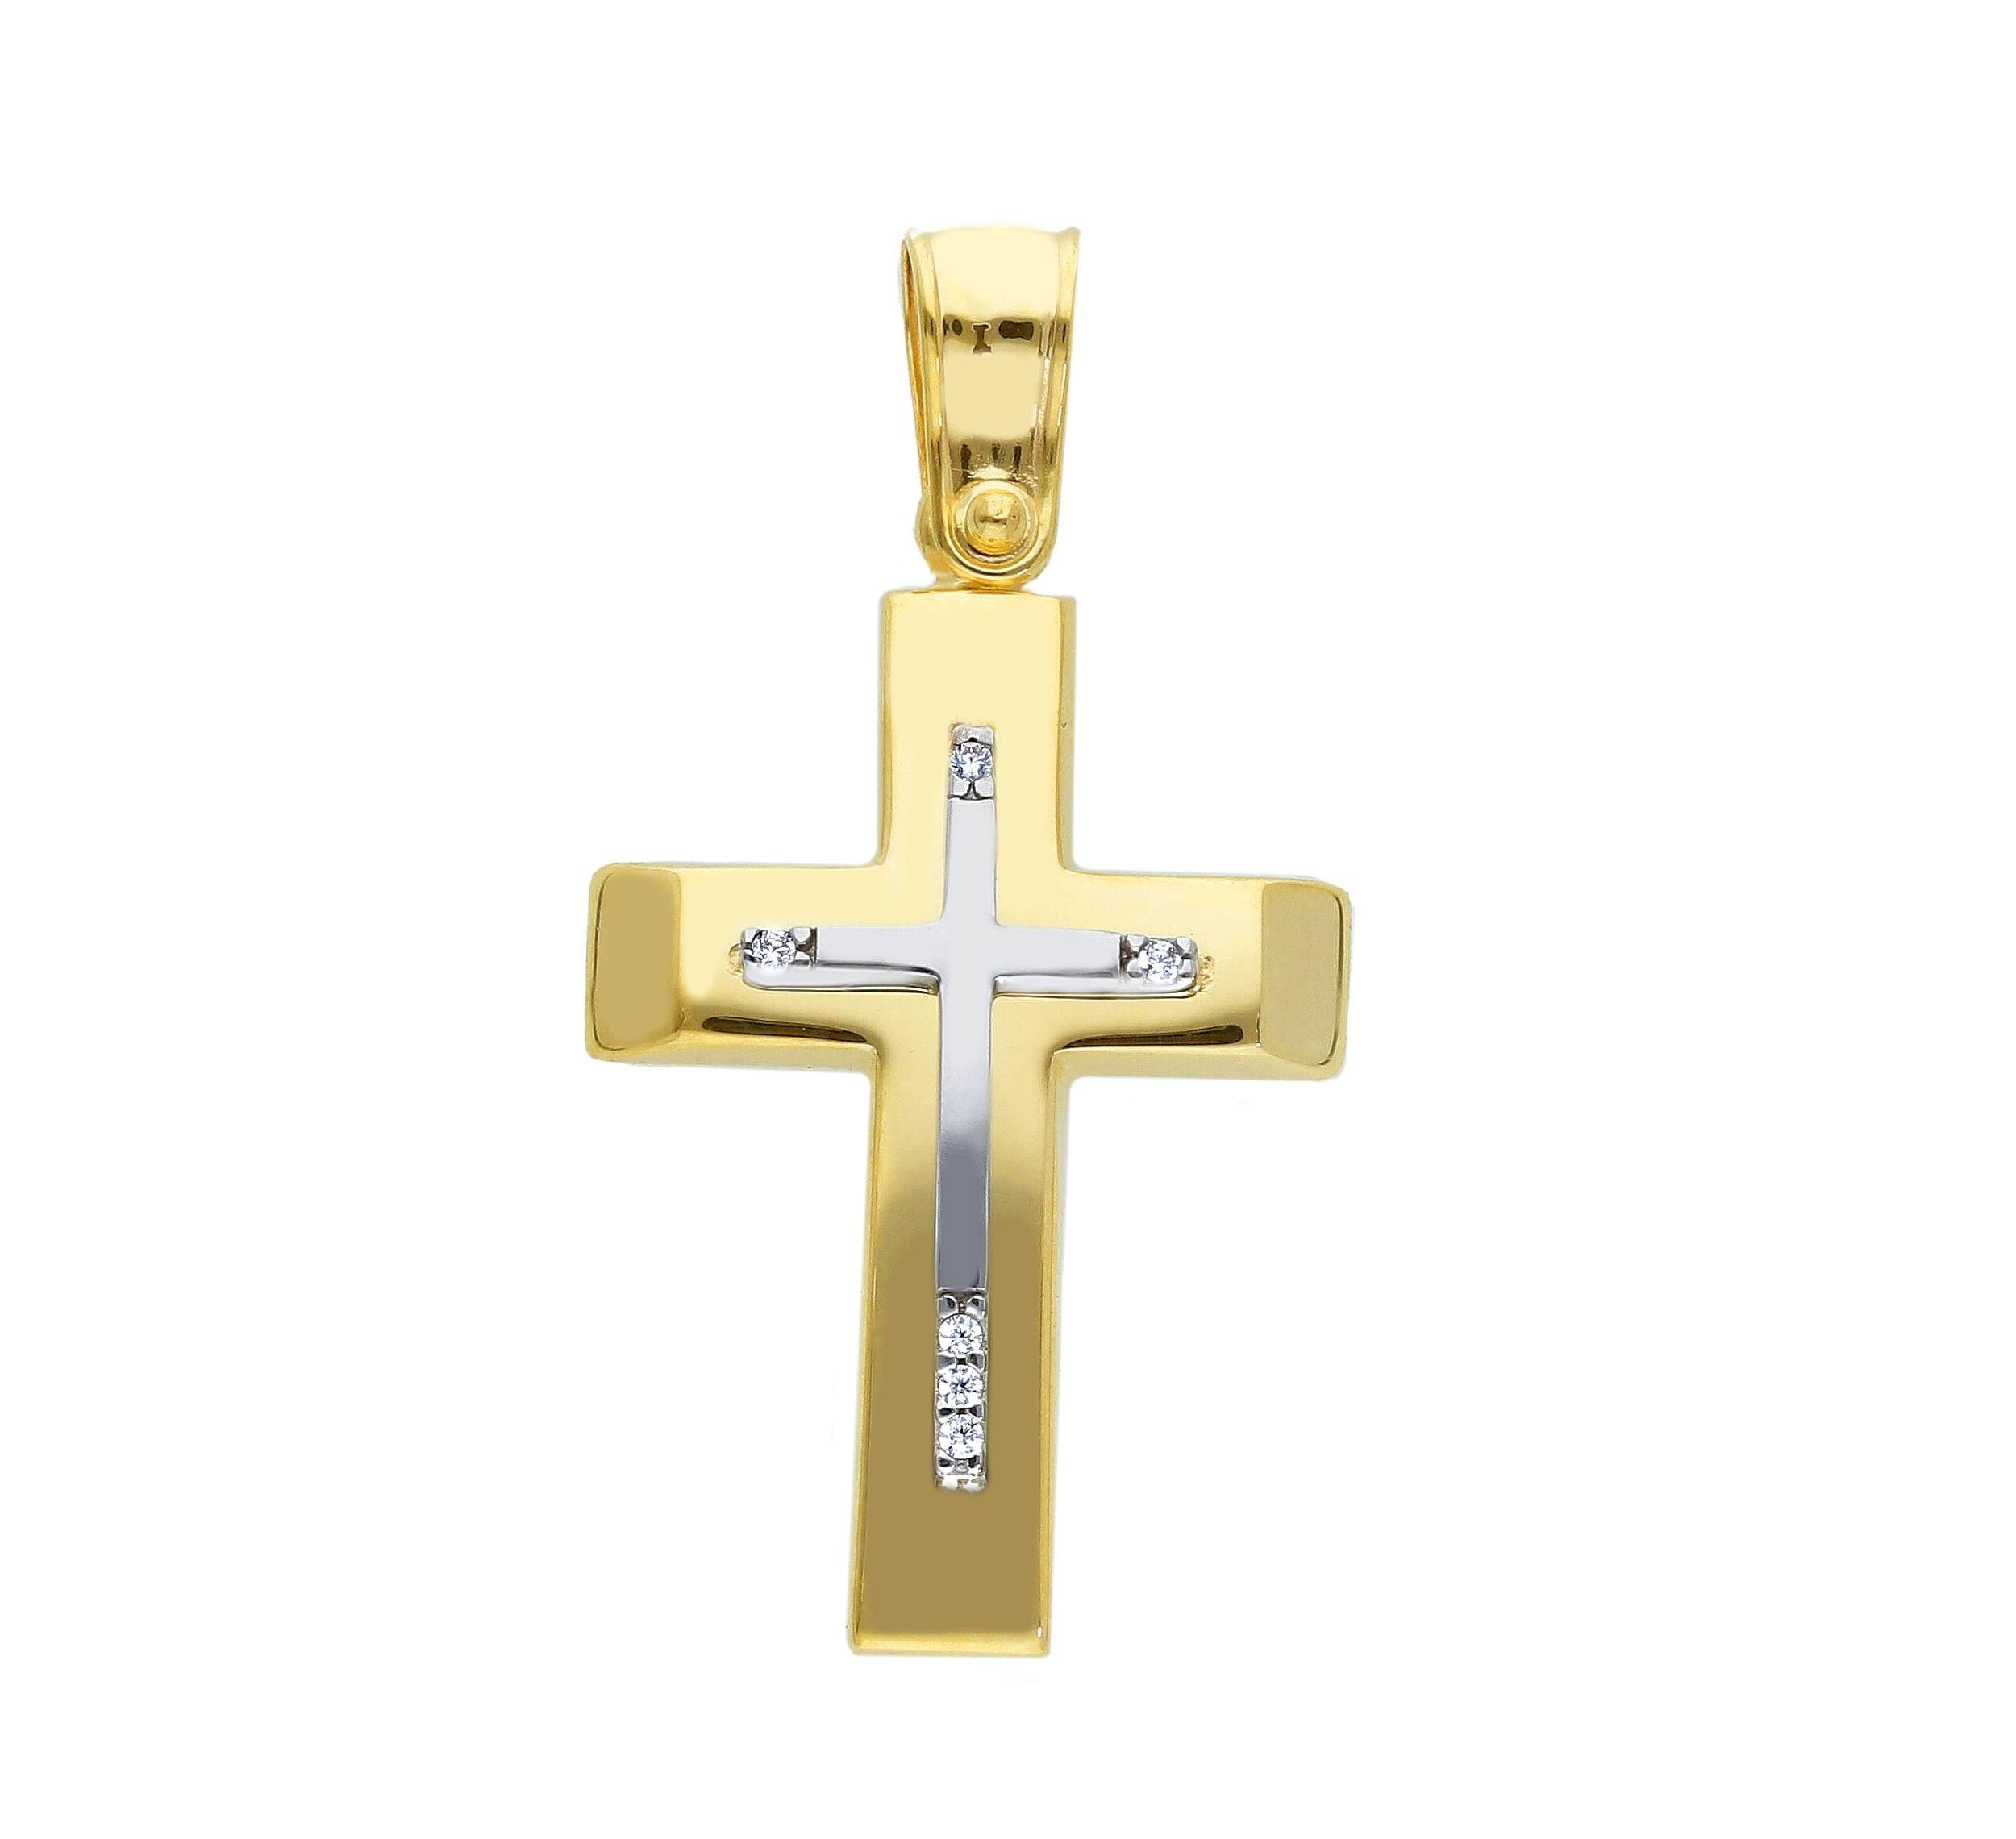 Golden cross k14 with white gold detail (code S250154)